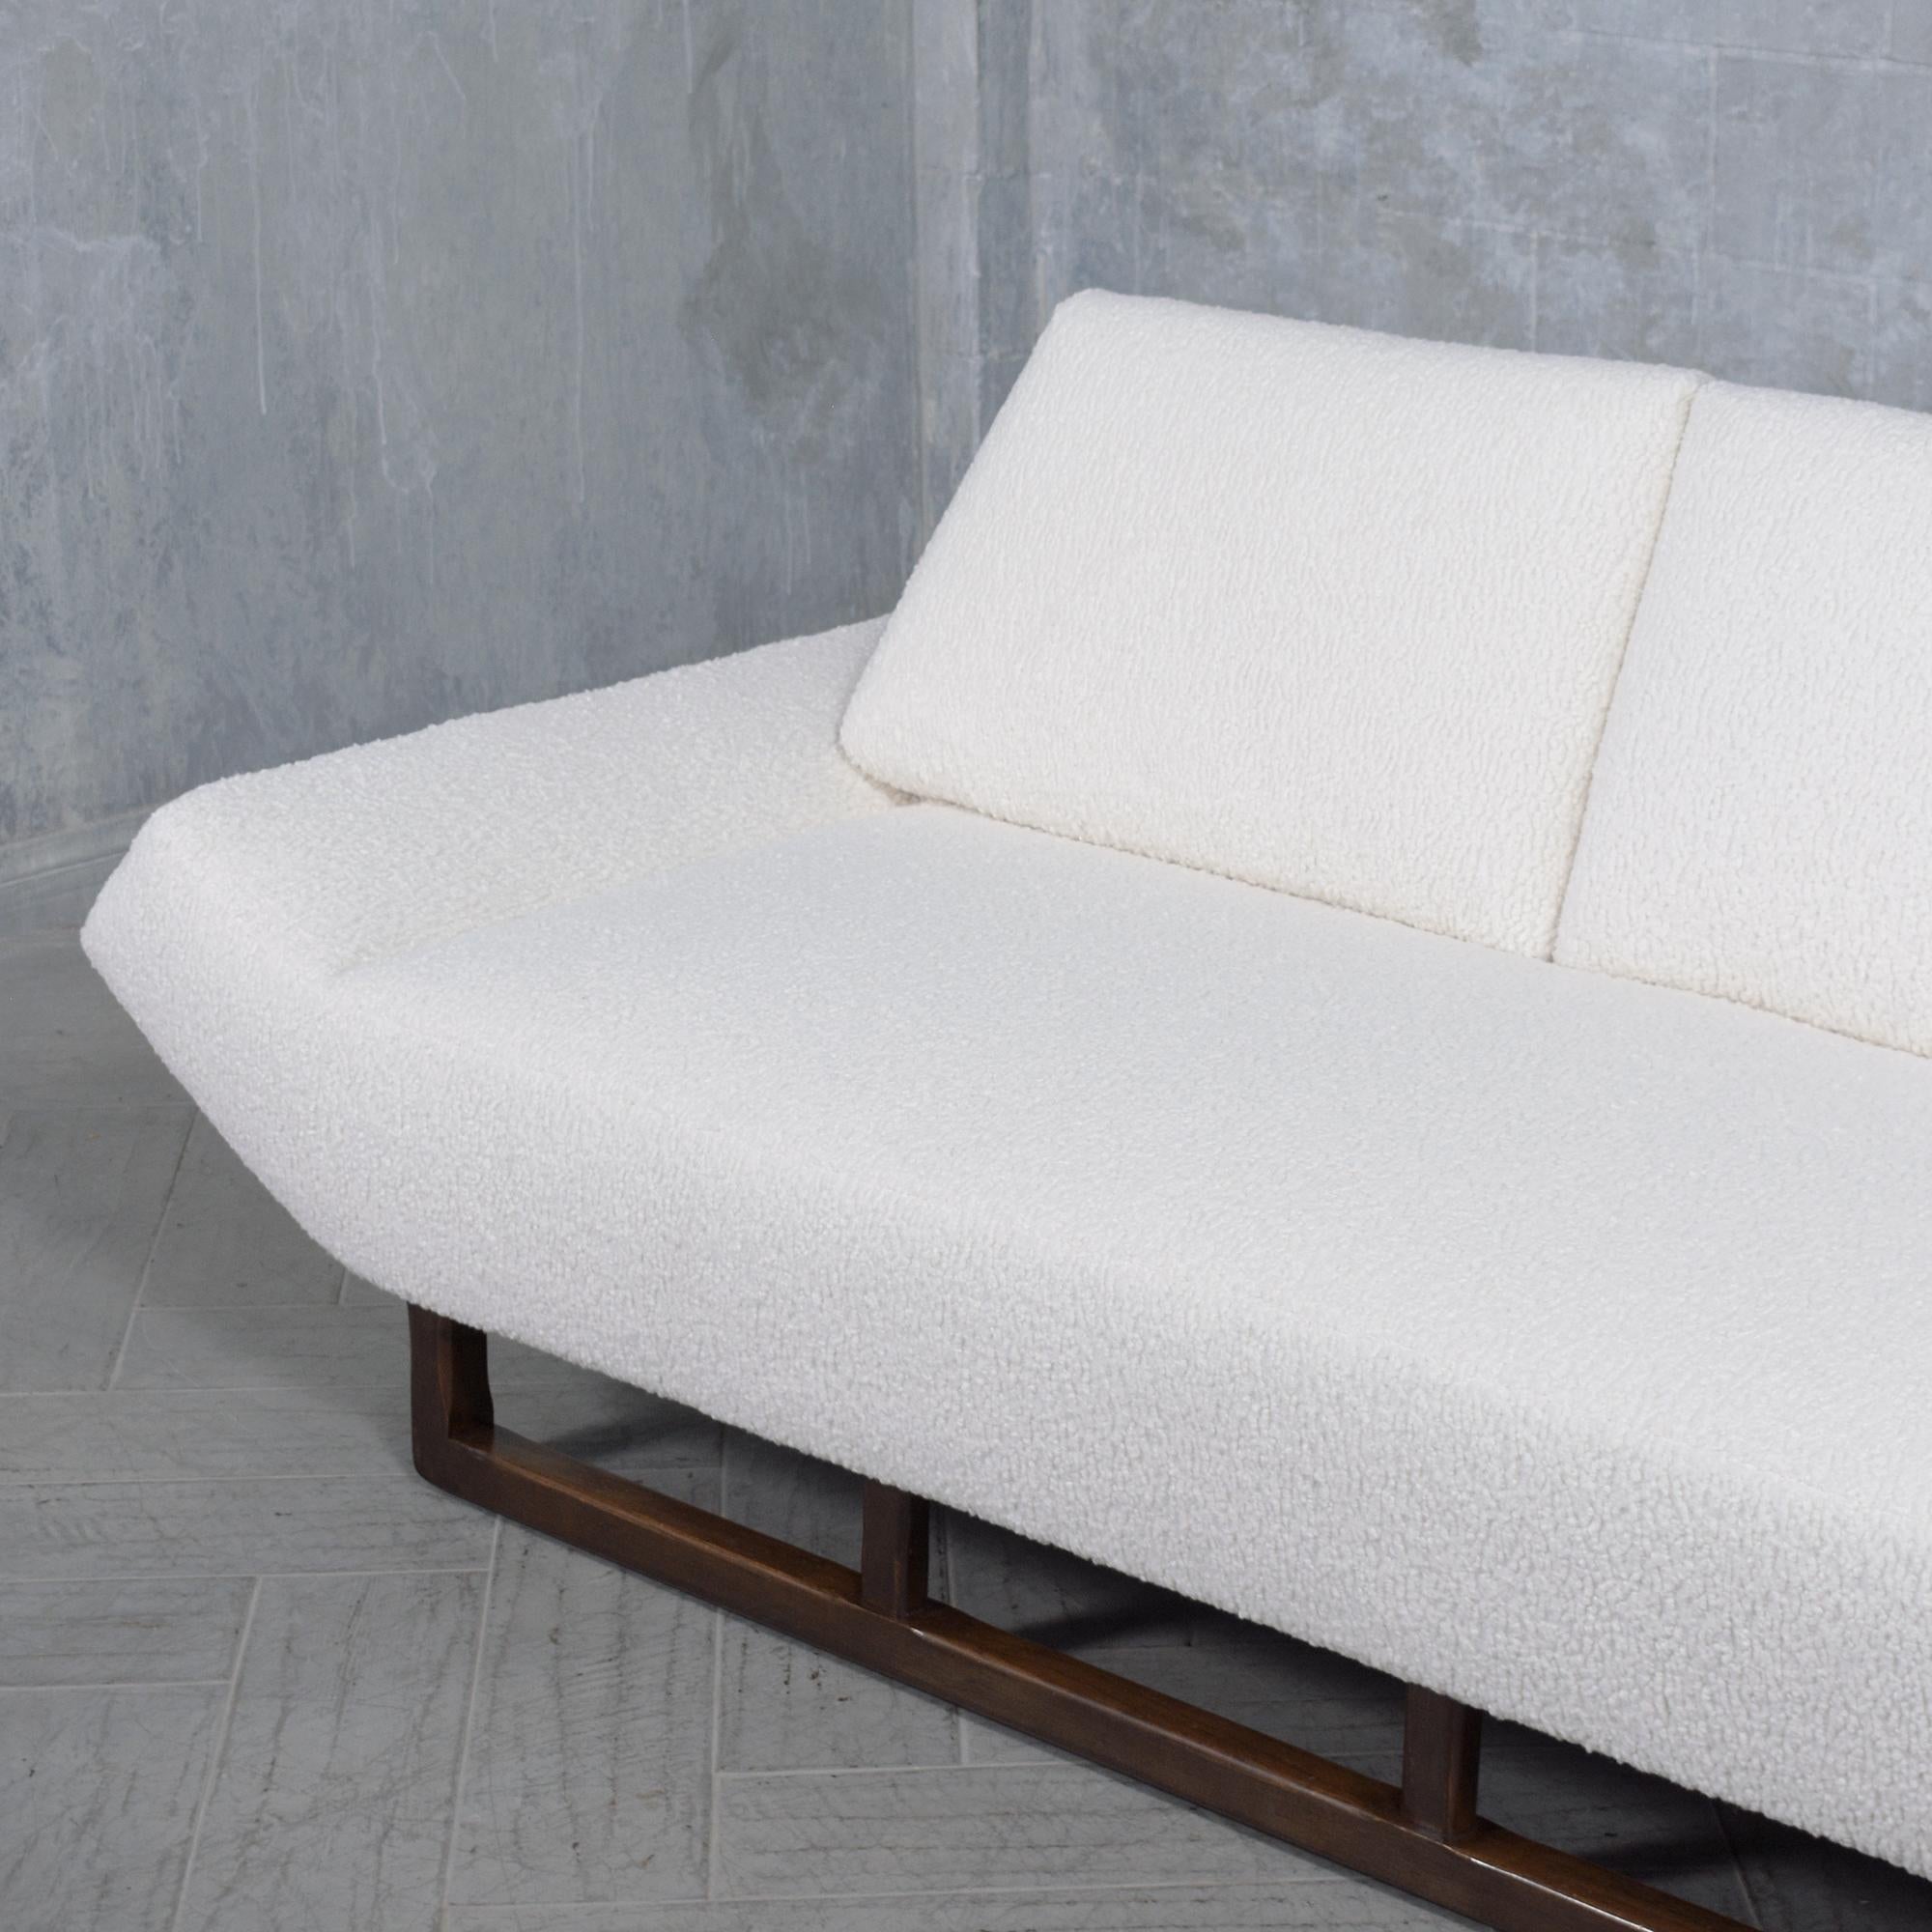 Mid-20th Century Vintage Mid-Century Sofa Restored: Classic Design Meets Modern Comfort